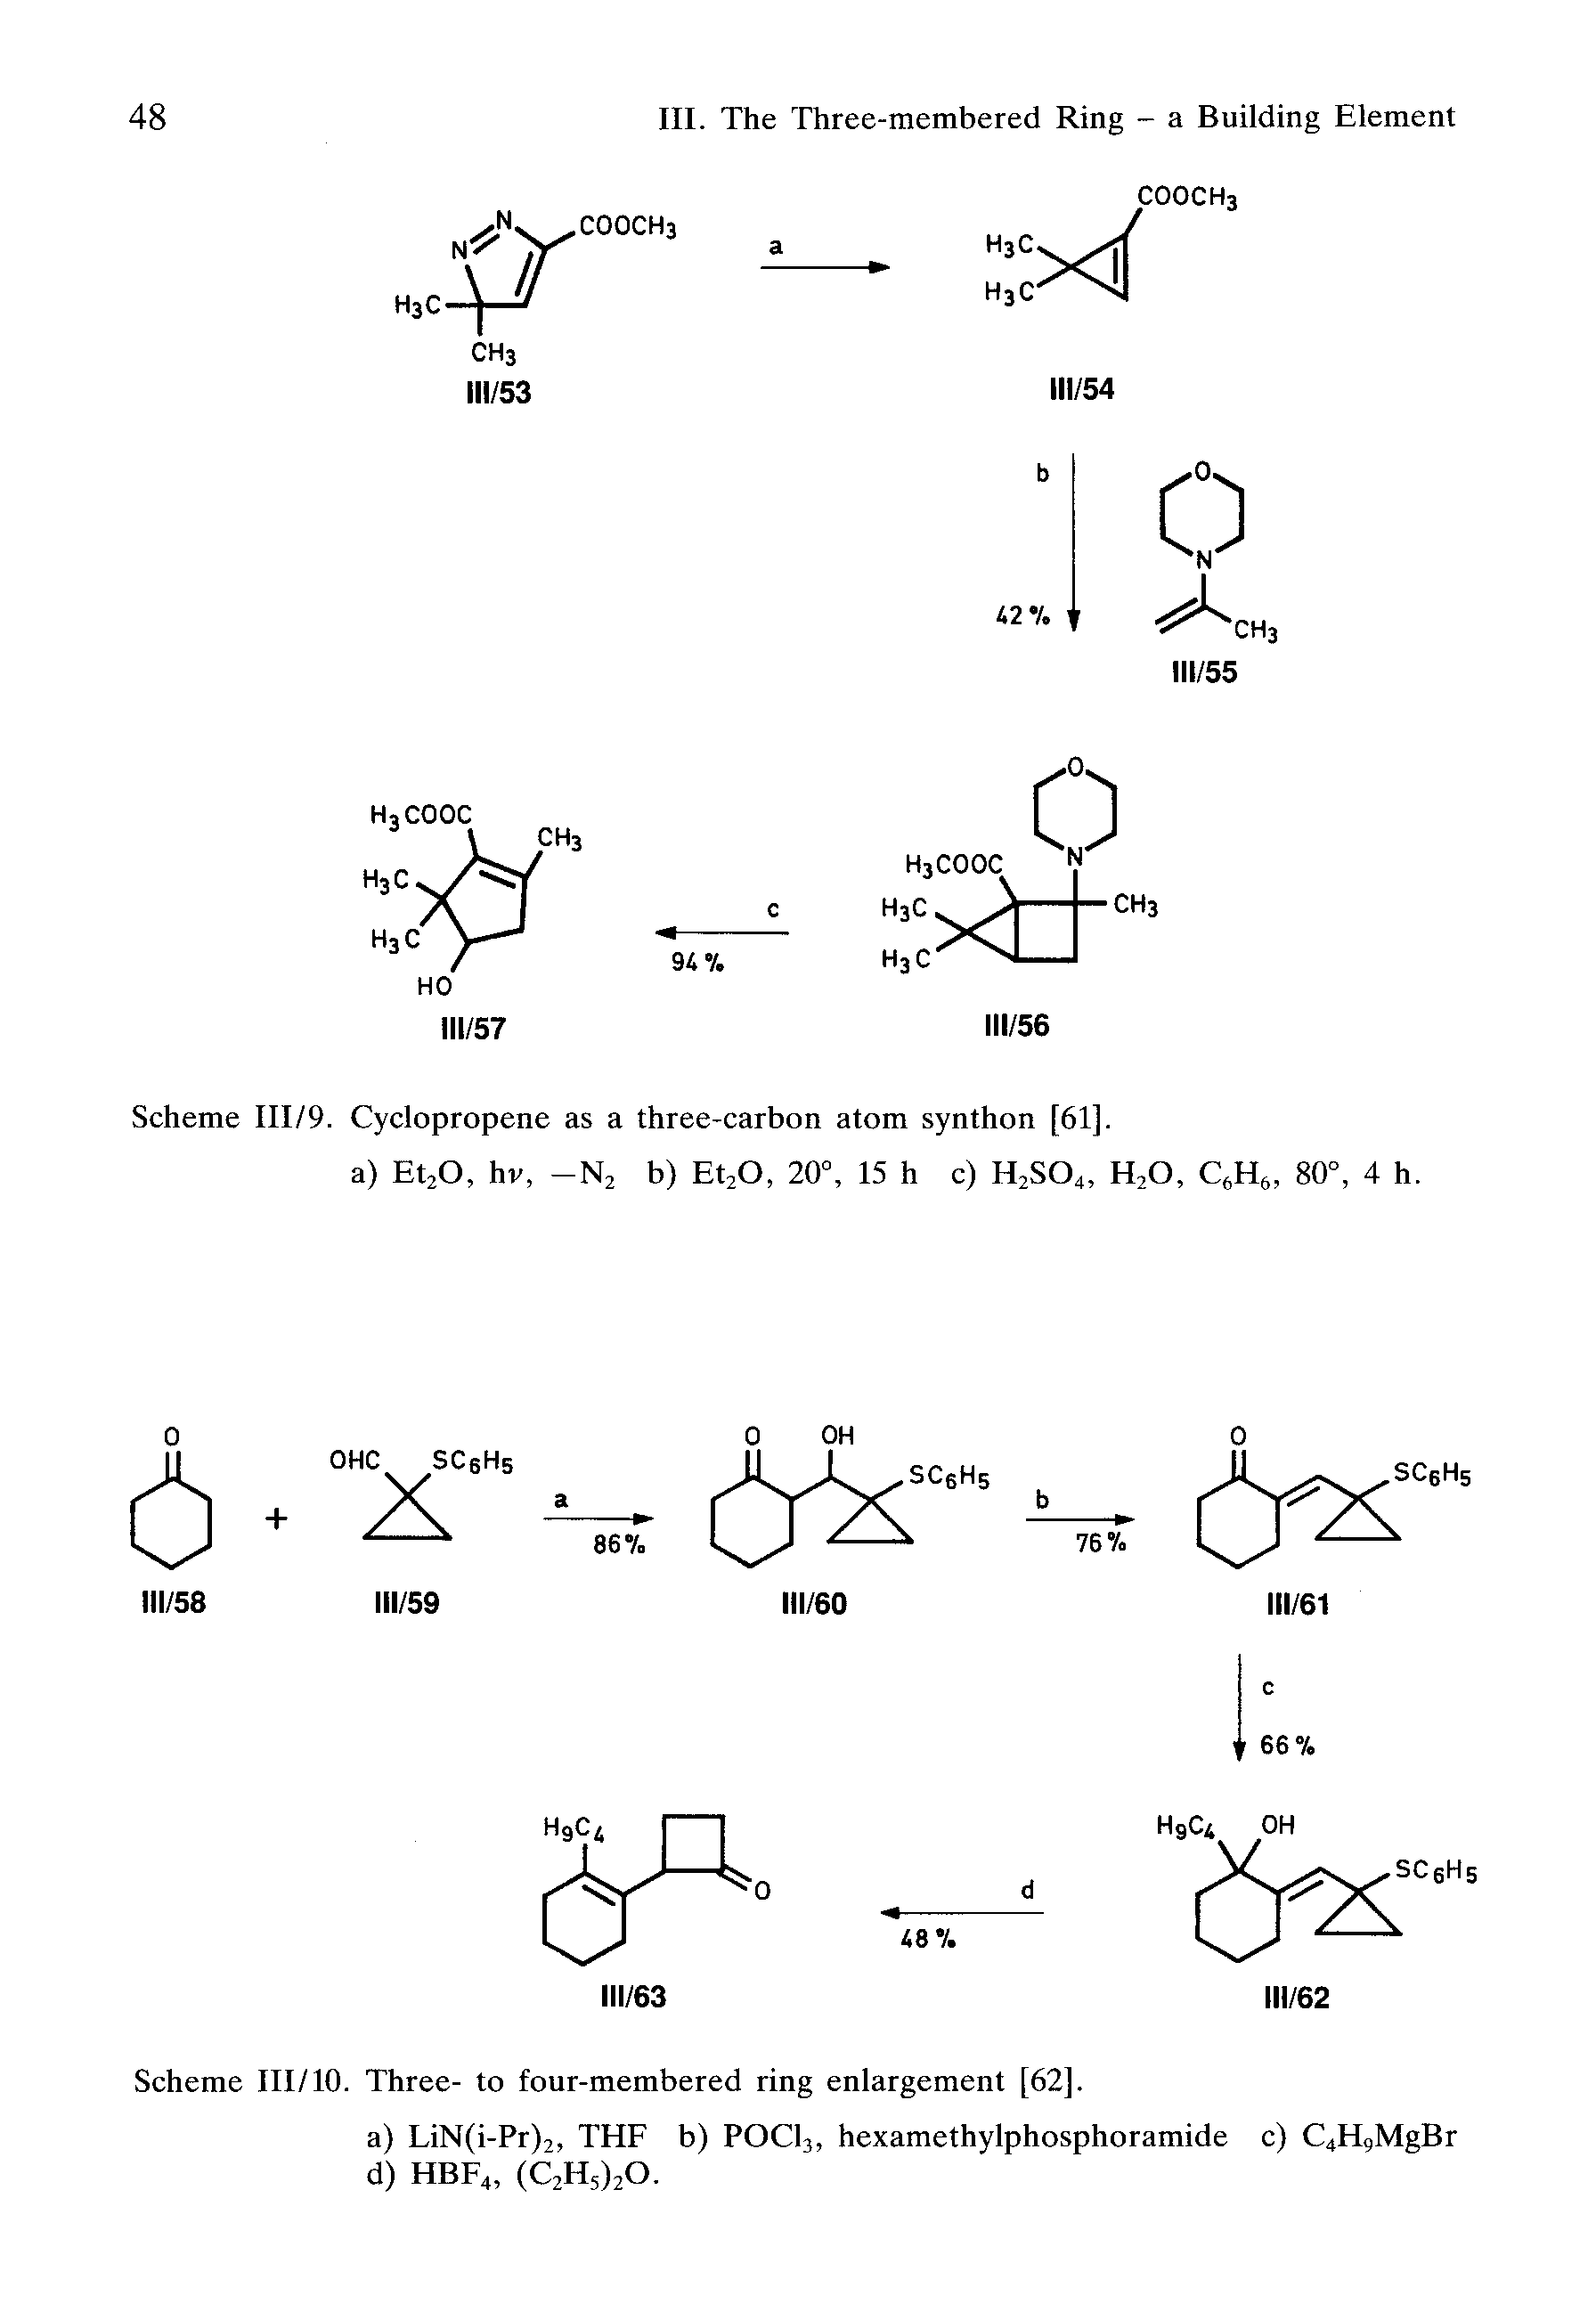 Scheme III/9. Cyclopropene as a three-carbon atom synthon [61].